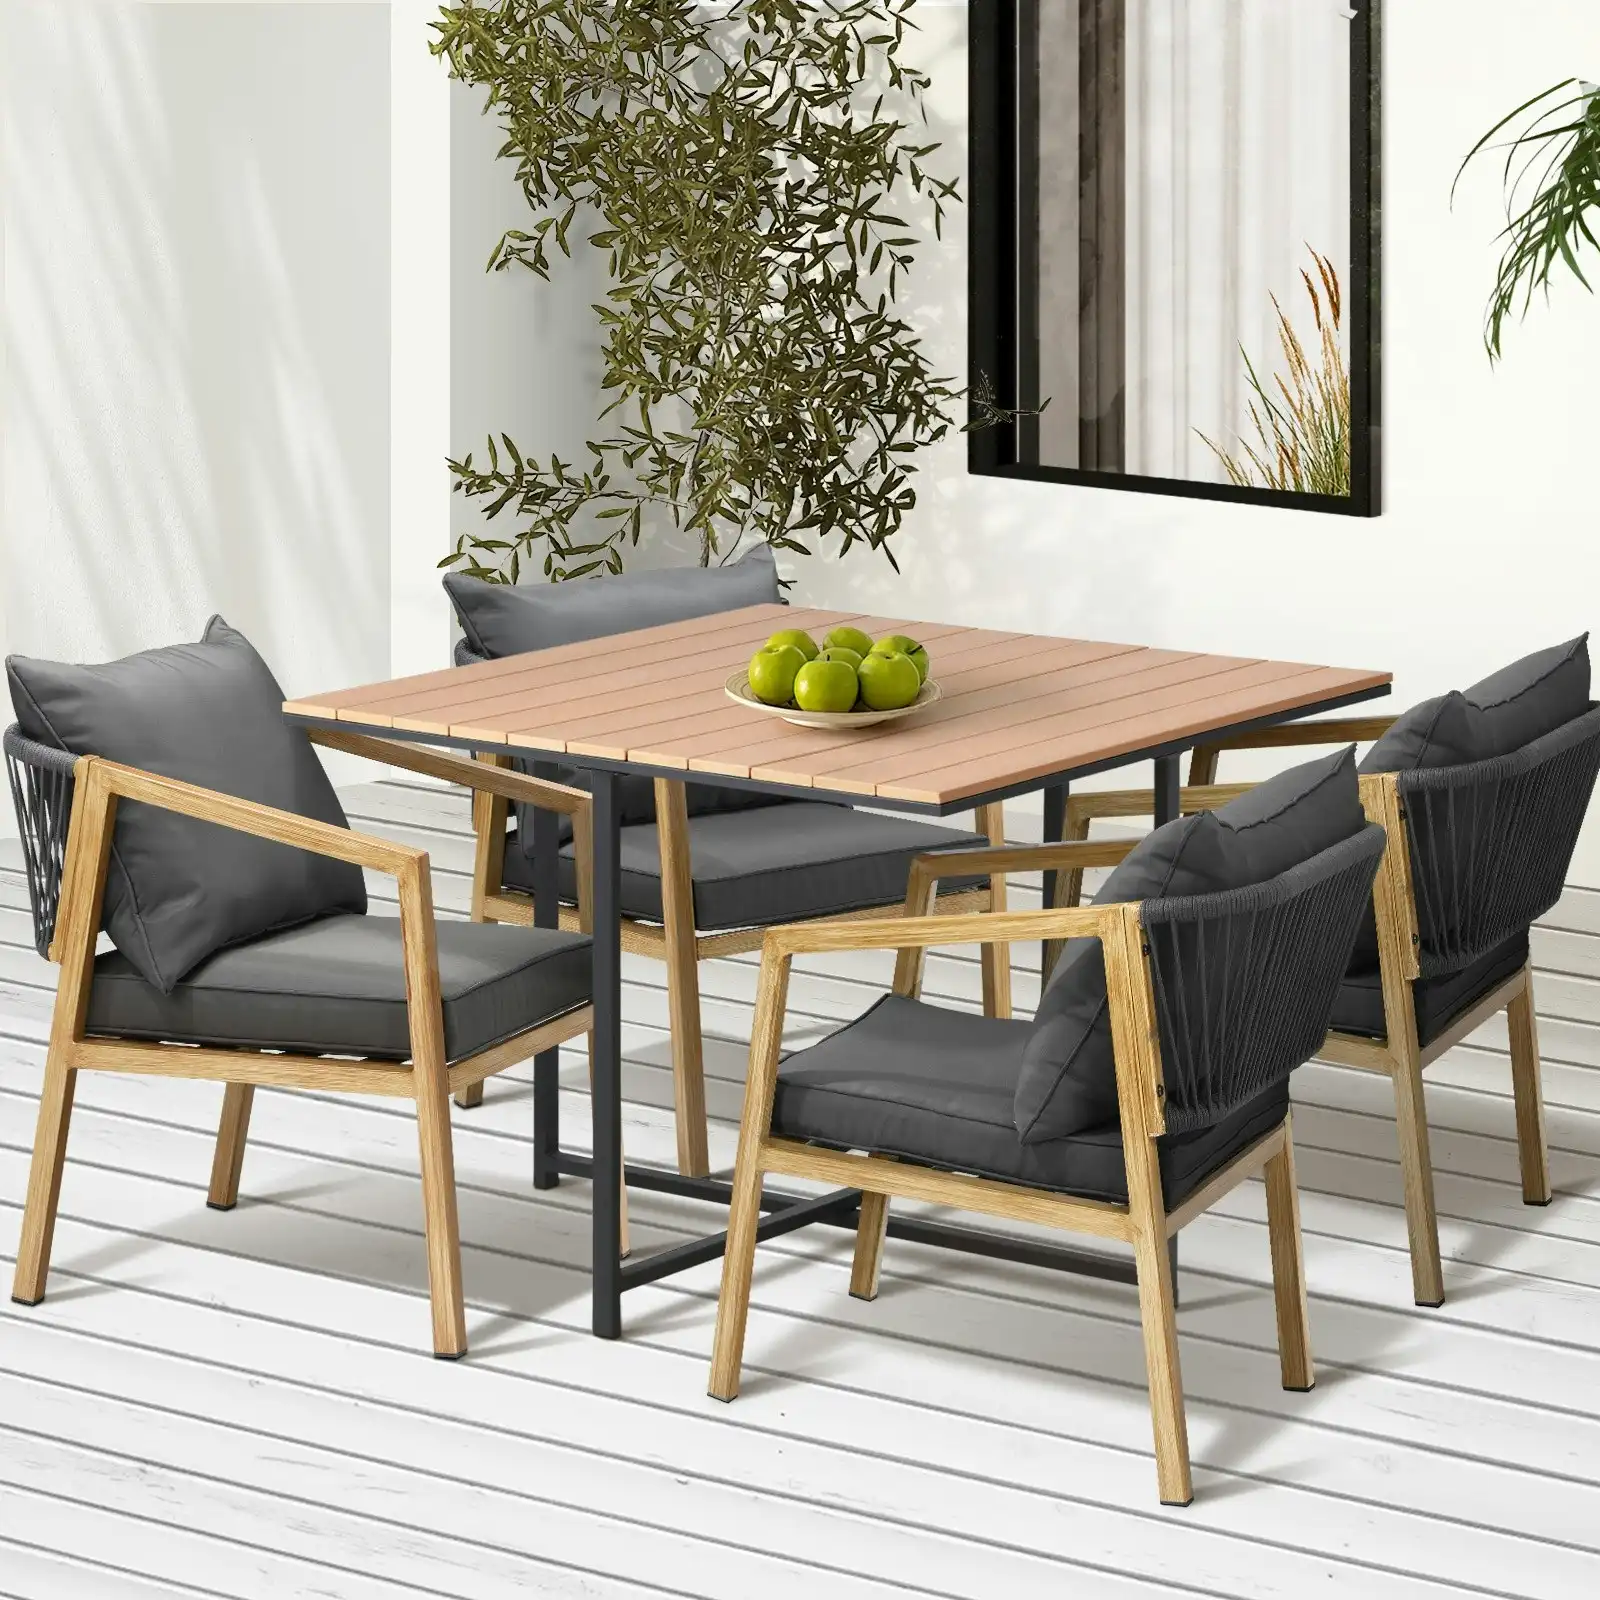 Livsip 5PCS Outdoor Patio Set Furniture Table Armchair Garden Dining Setting